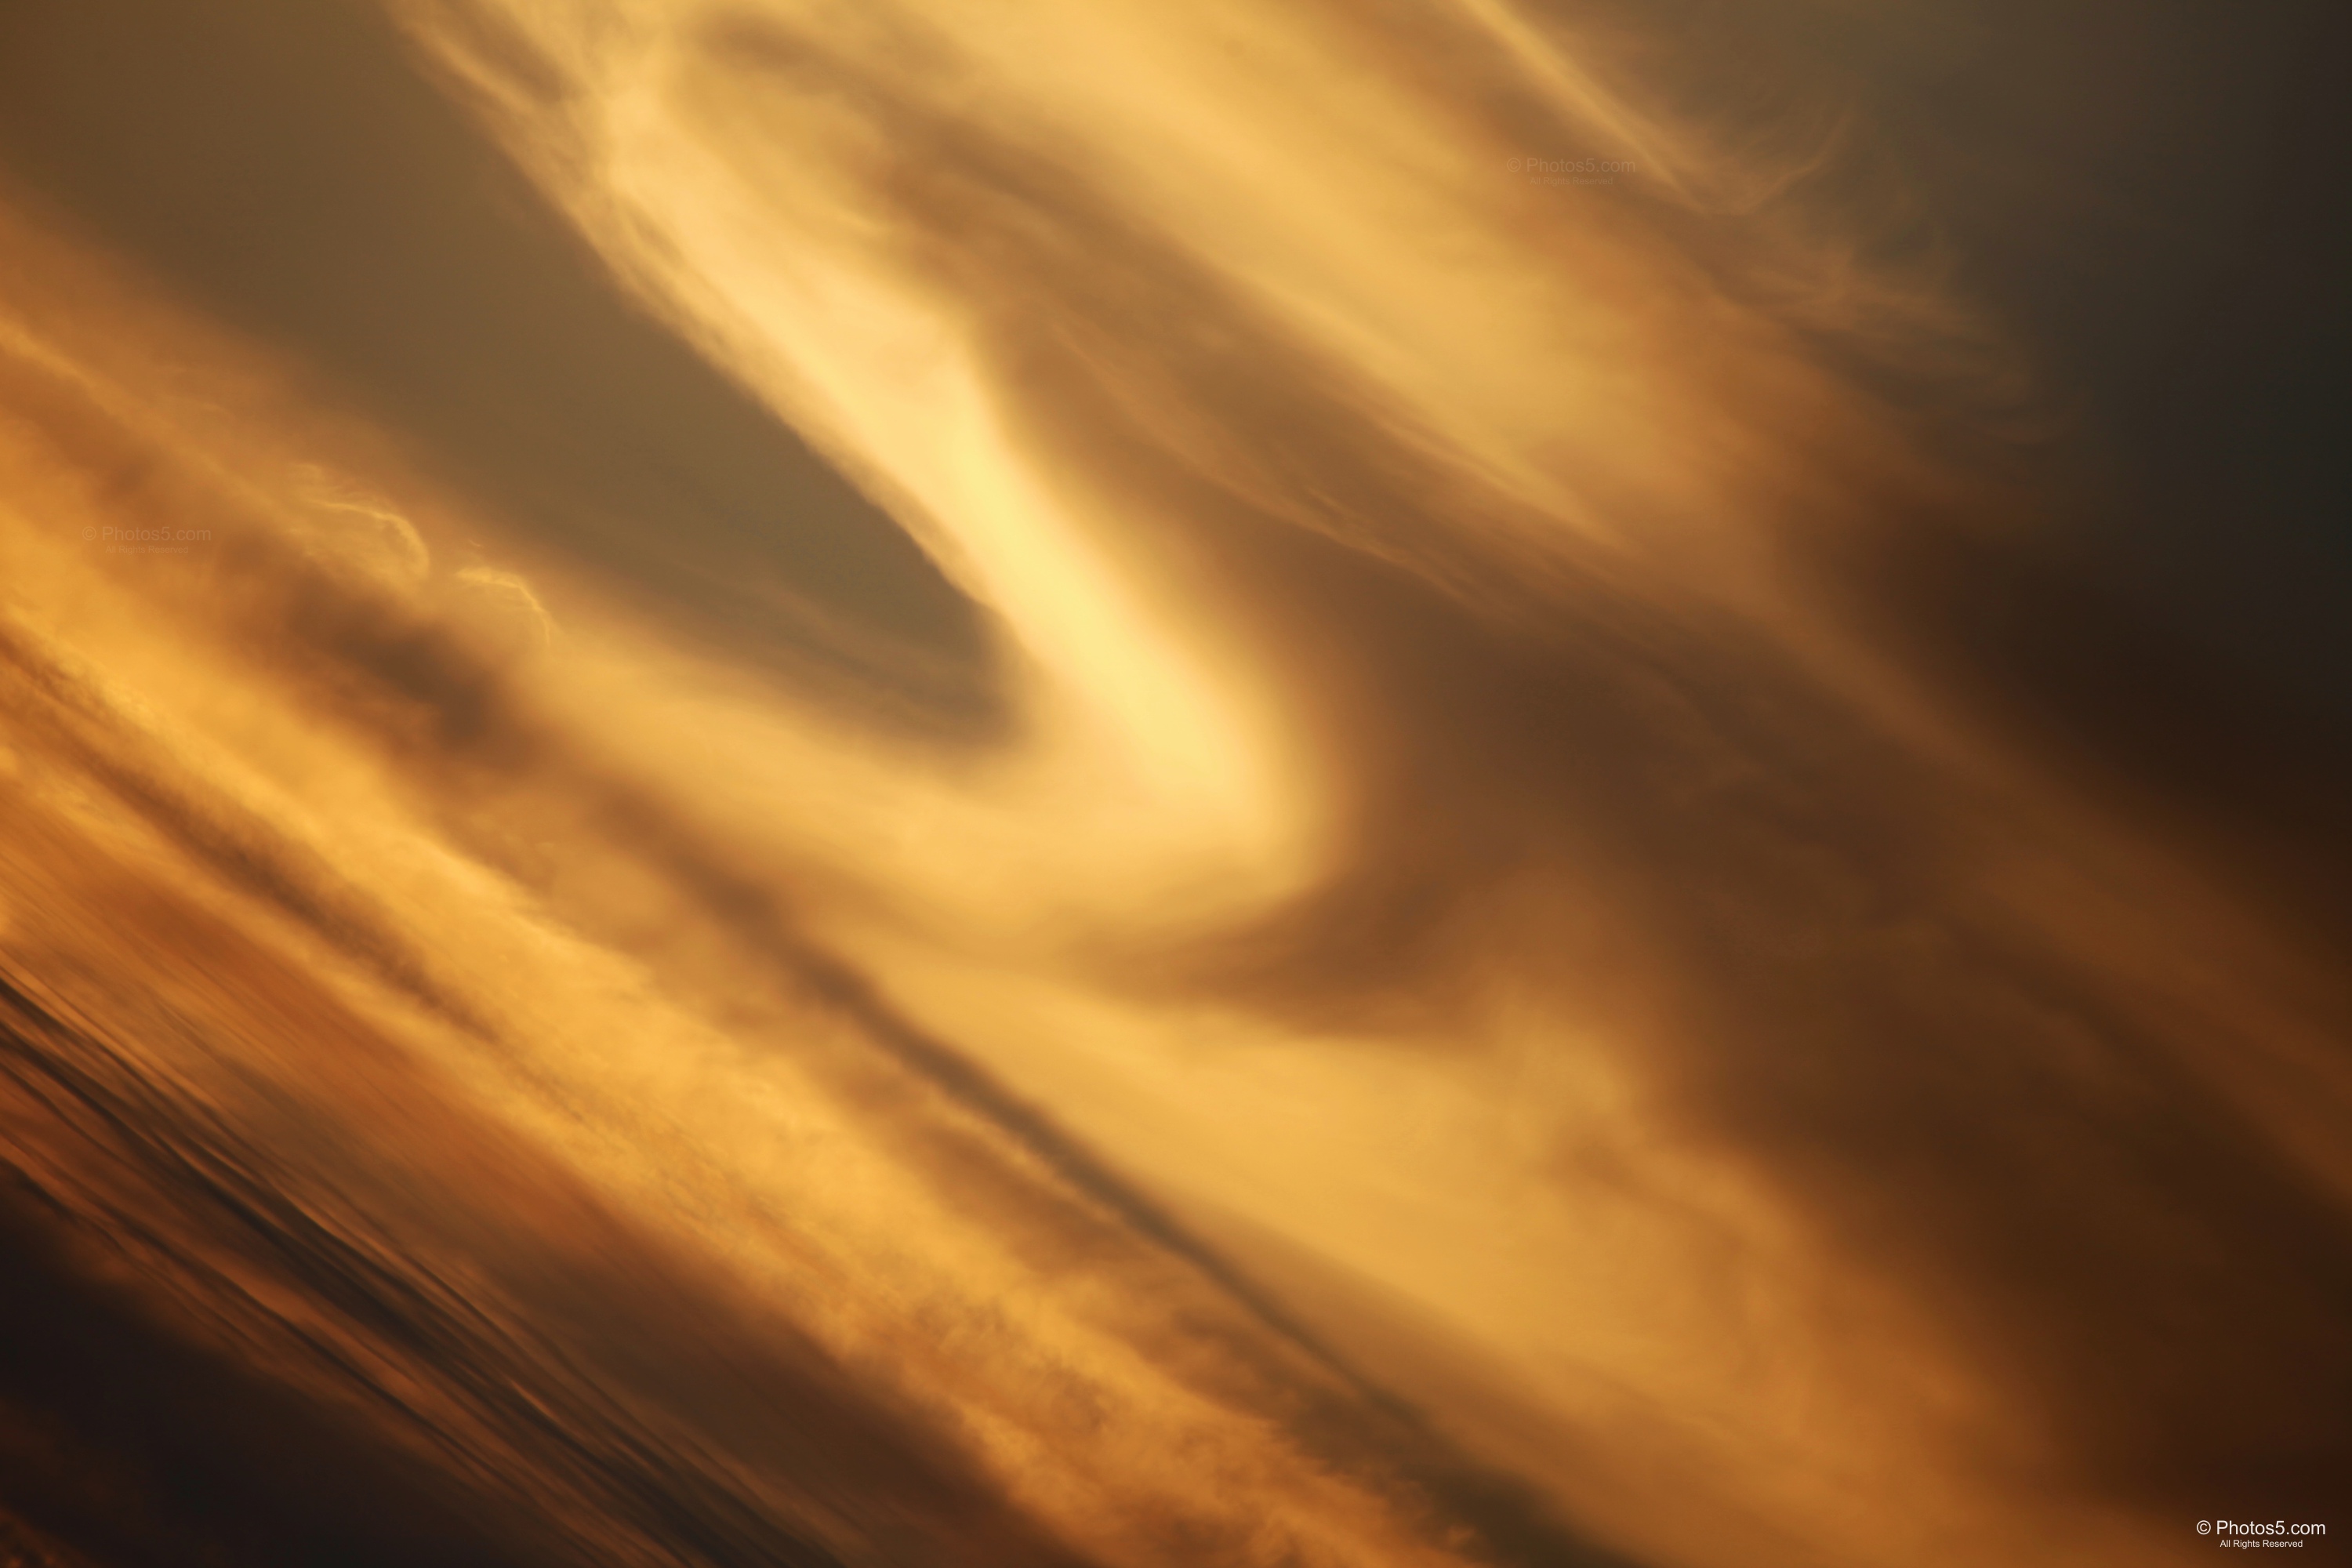 Swirly Clouds at Sunset – Photos5.com